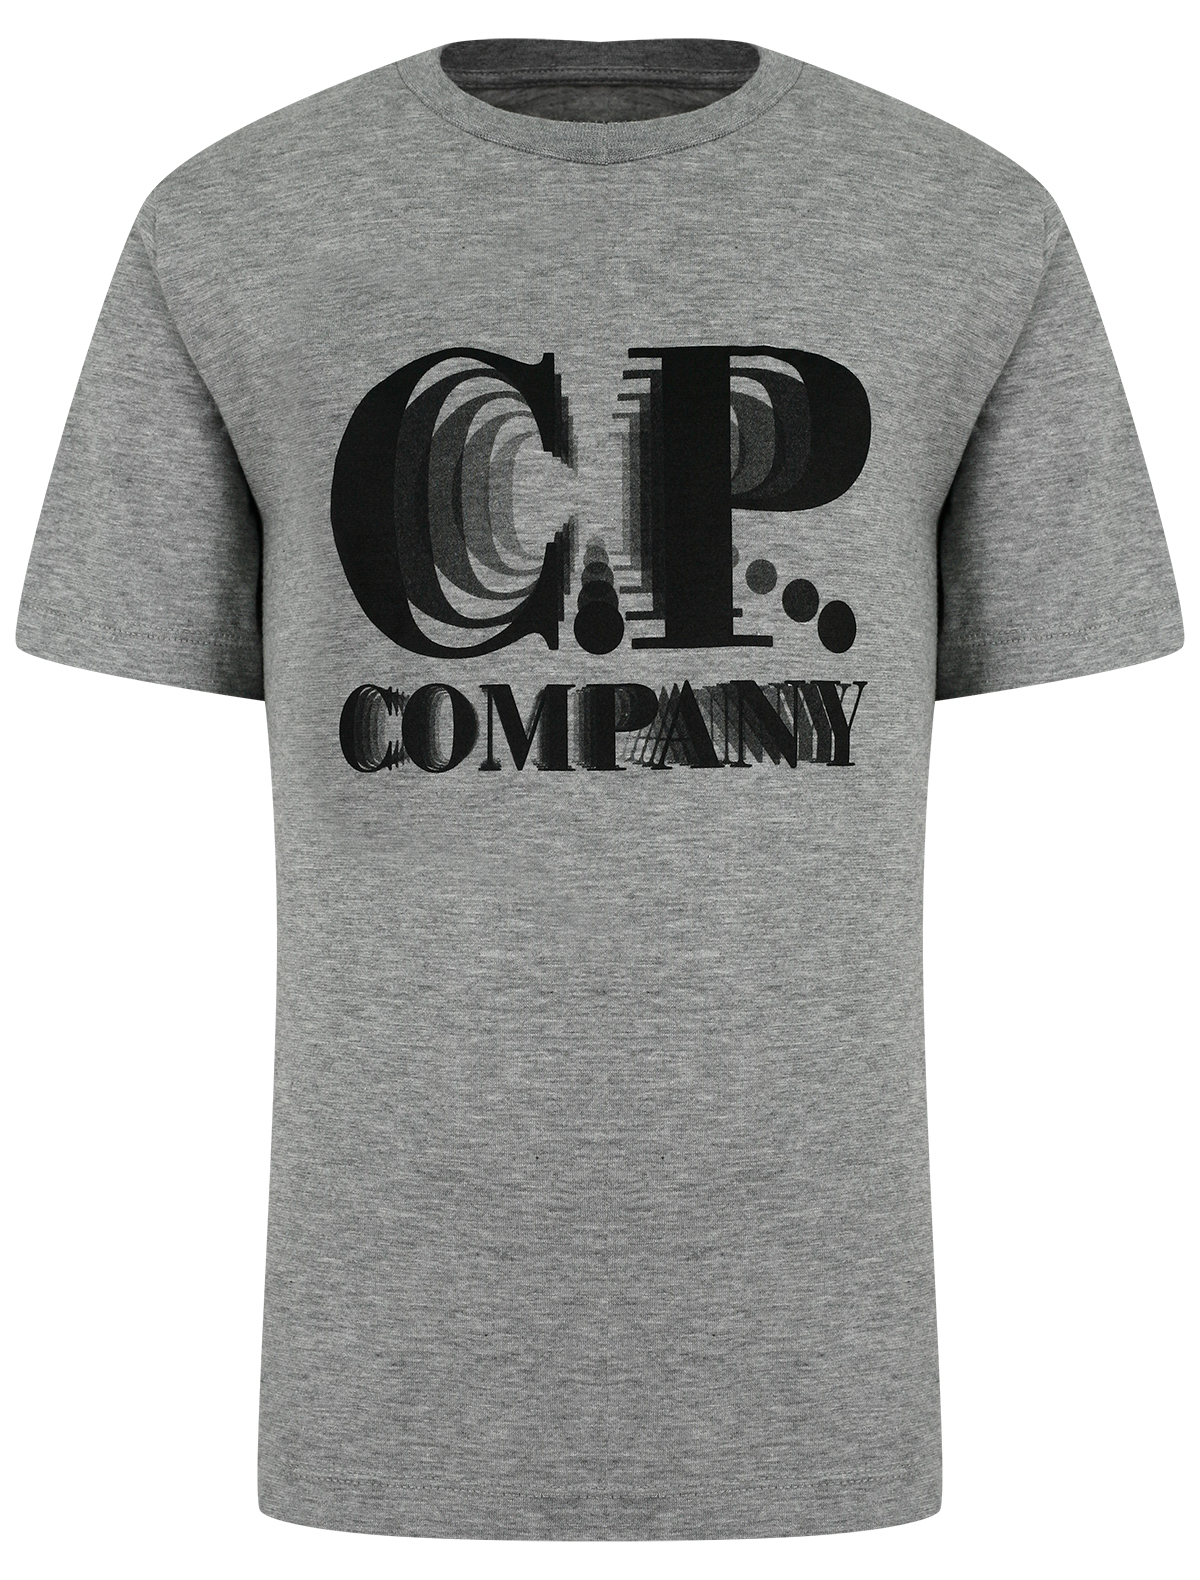 Футболка C.P.Company